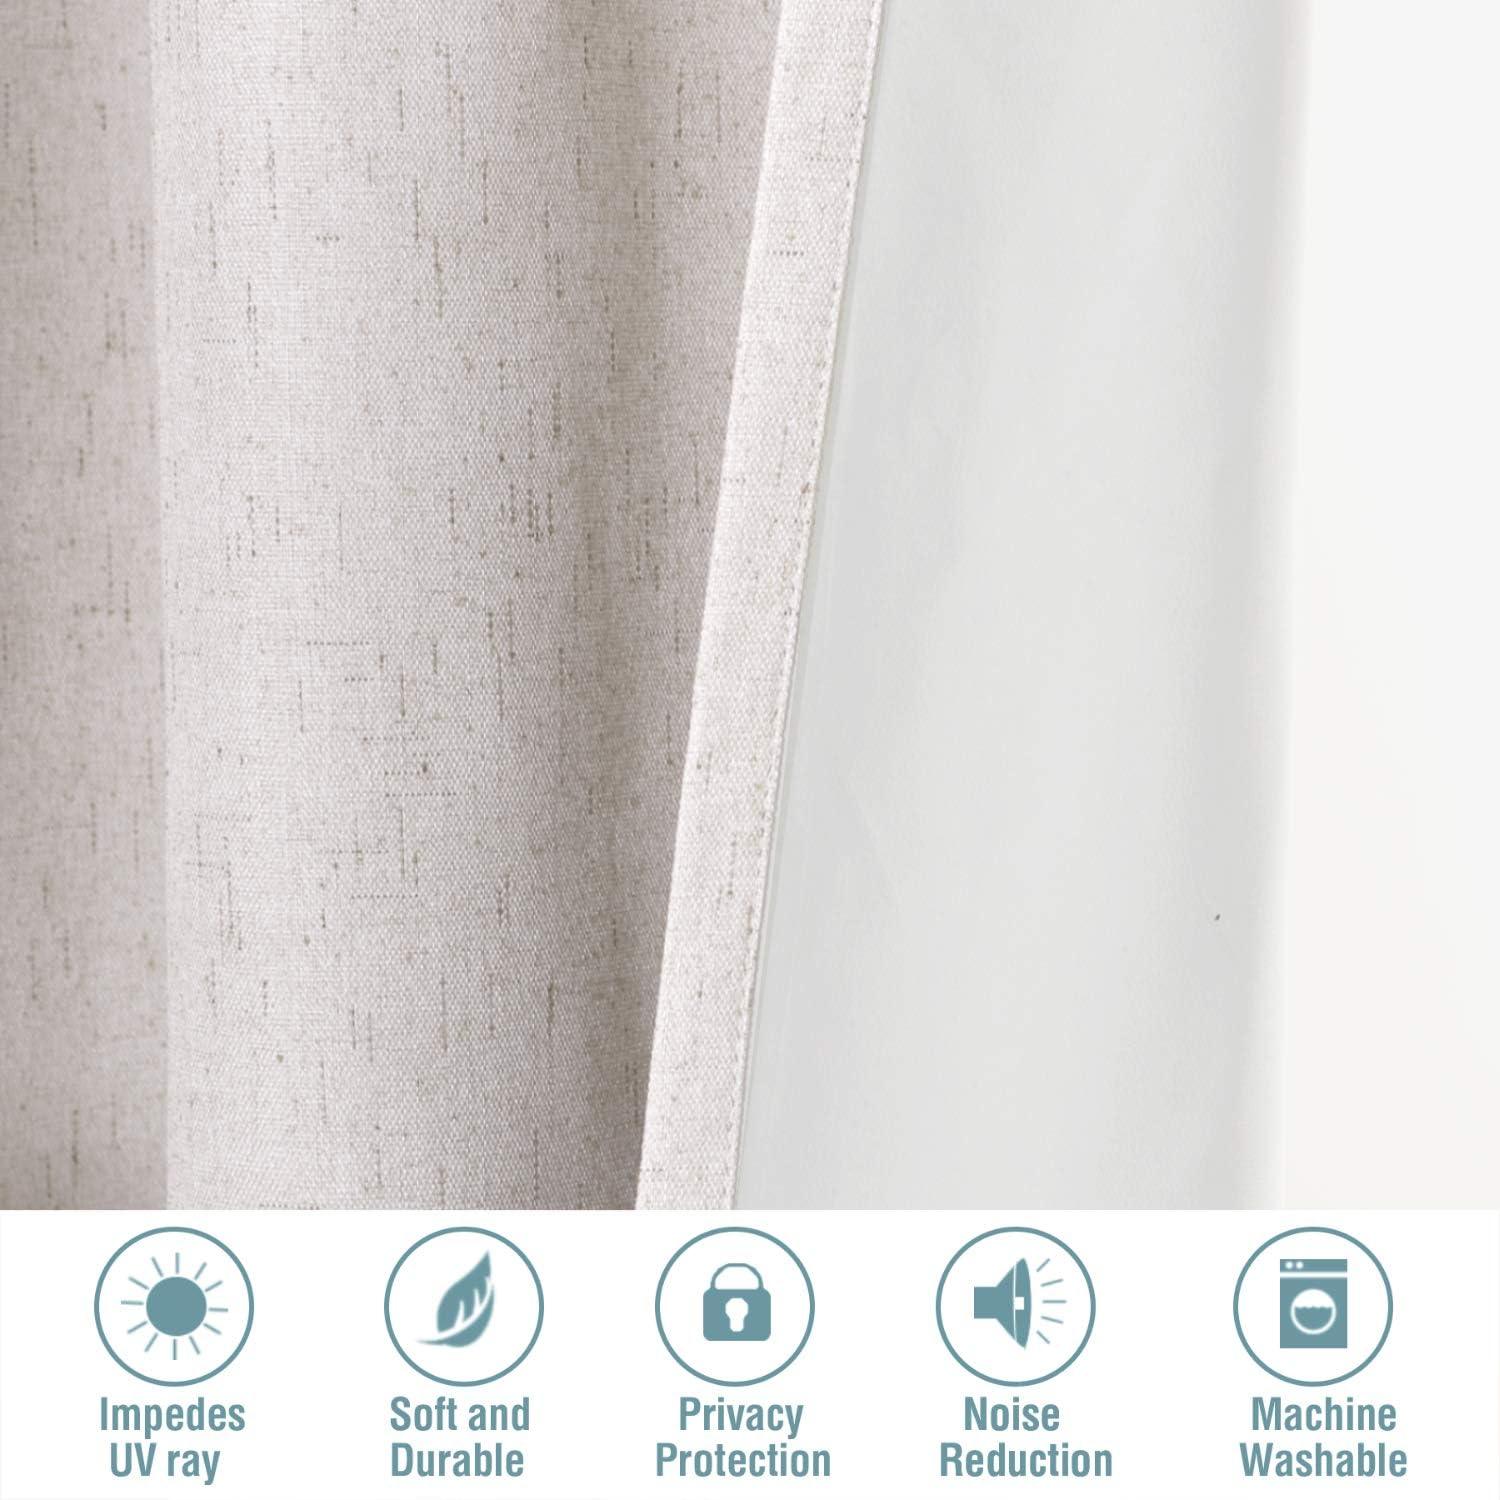 Cortinas opacas de lino 100% opacas, con aislamiento térmico, cortinas -  VIRTUAL MUEBLES